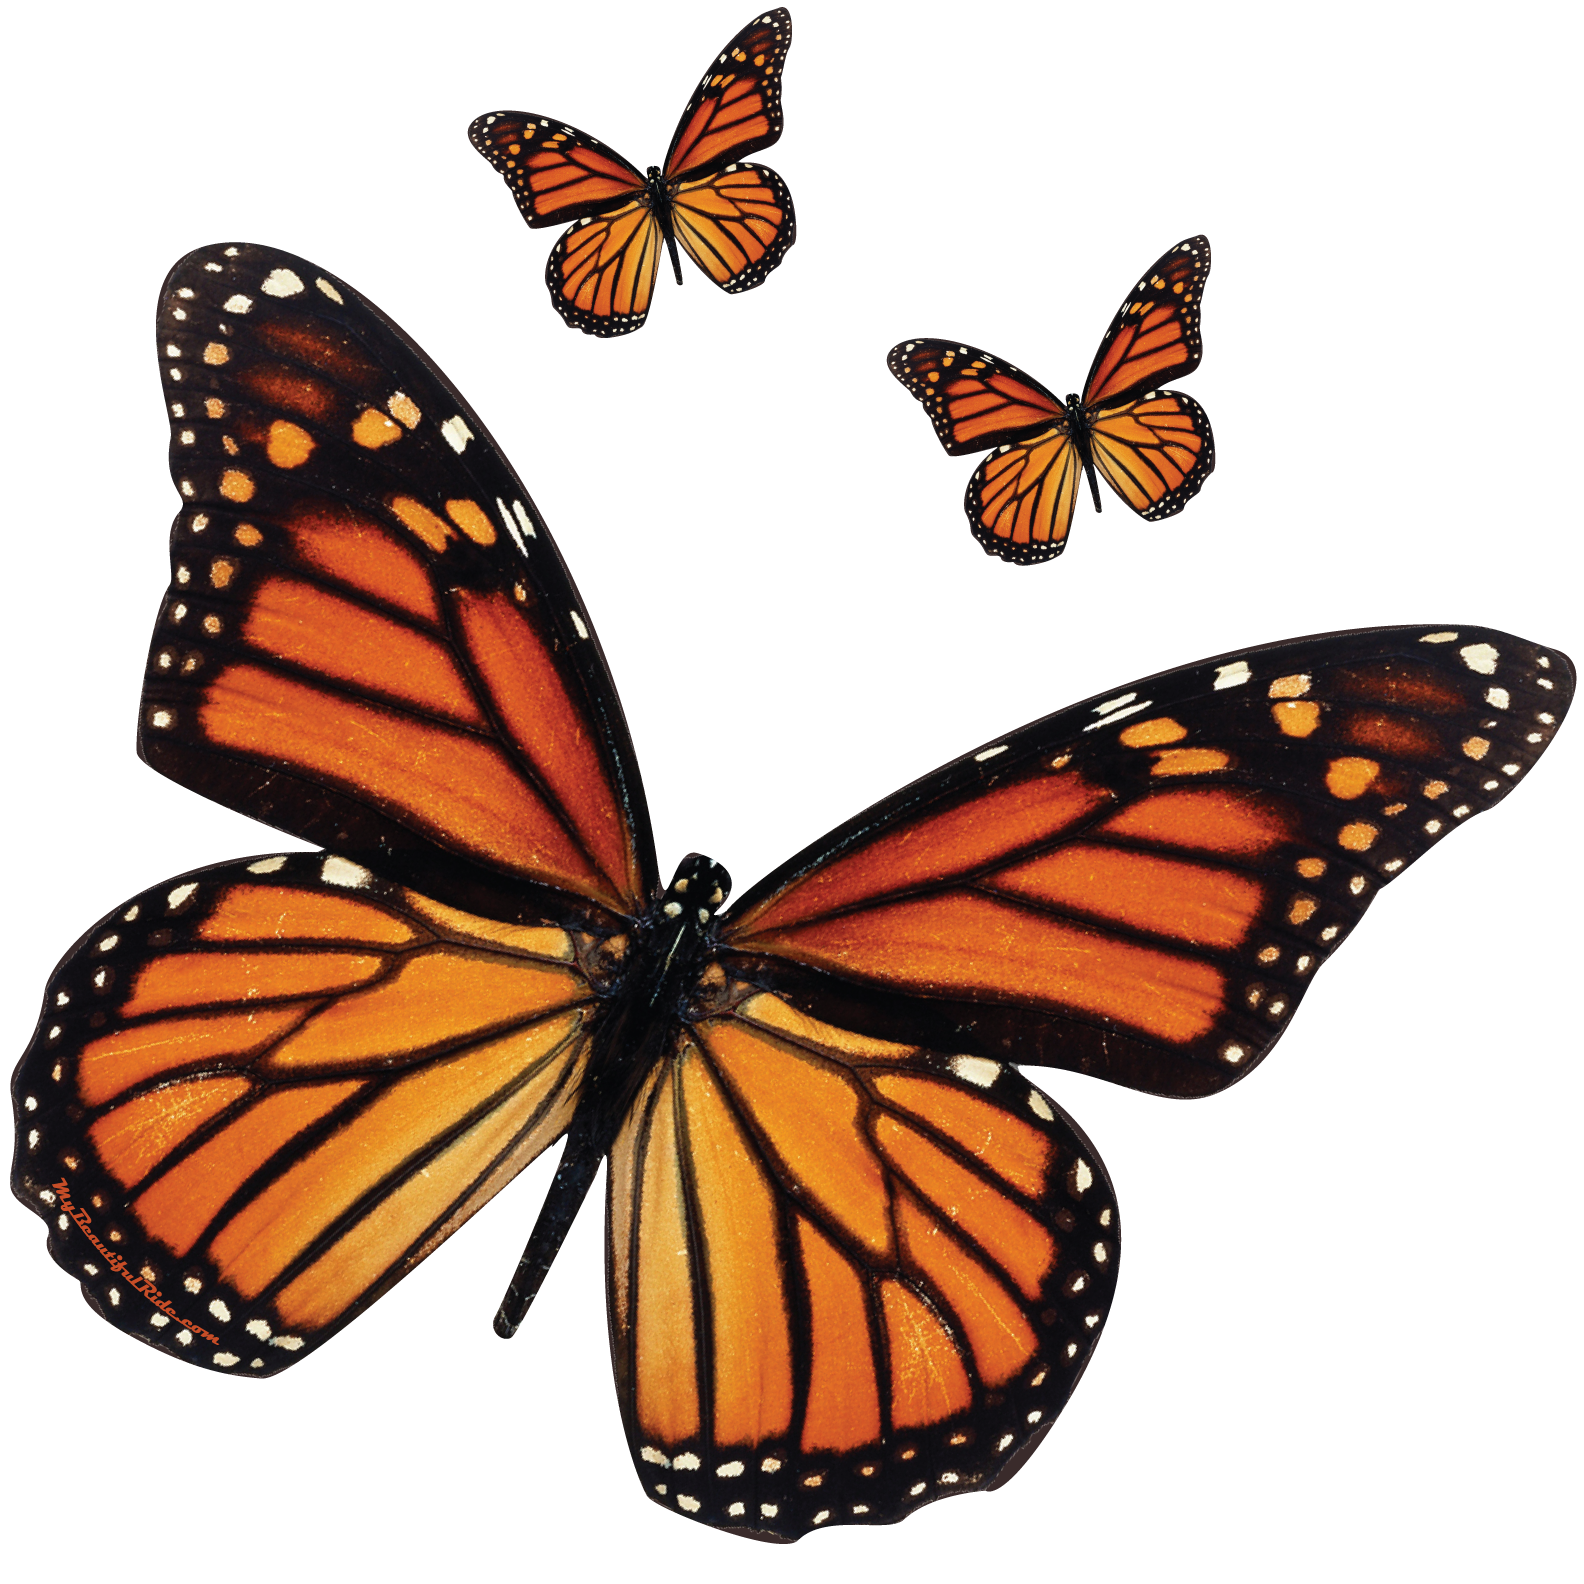 Monarch Migration - MyBeautifulRide - Monarch Butterfly Decals